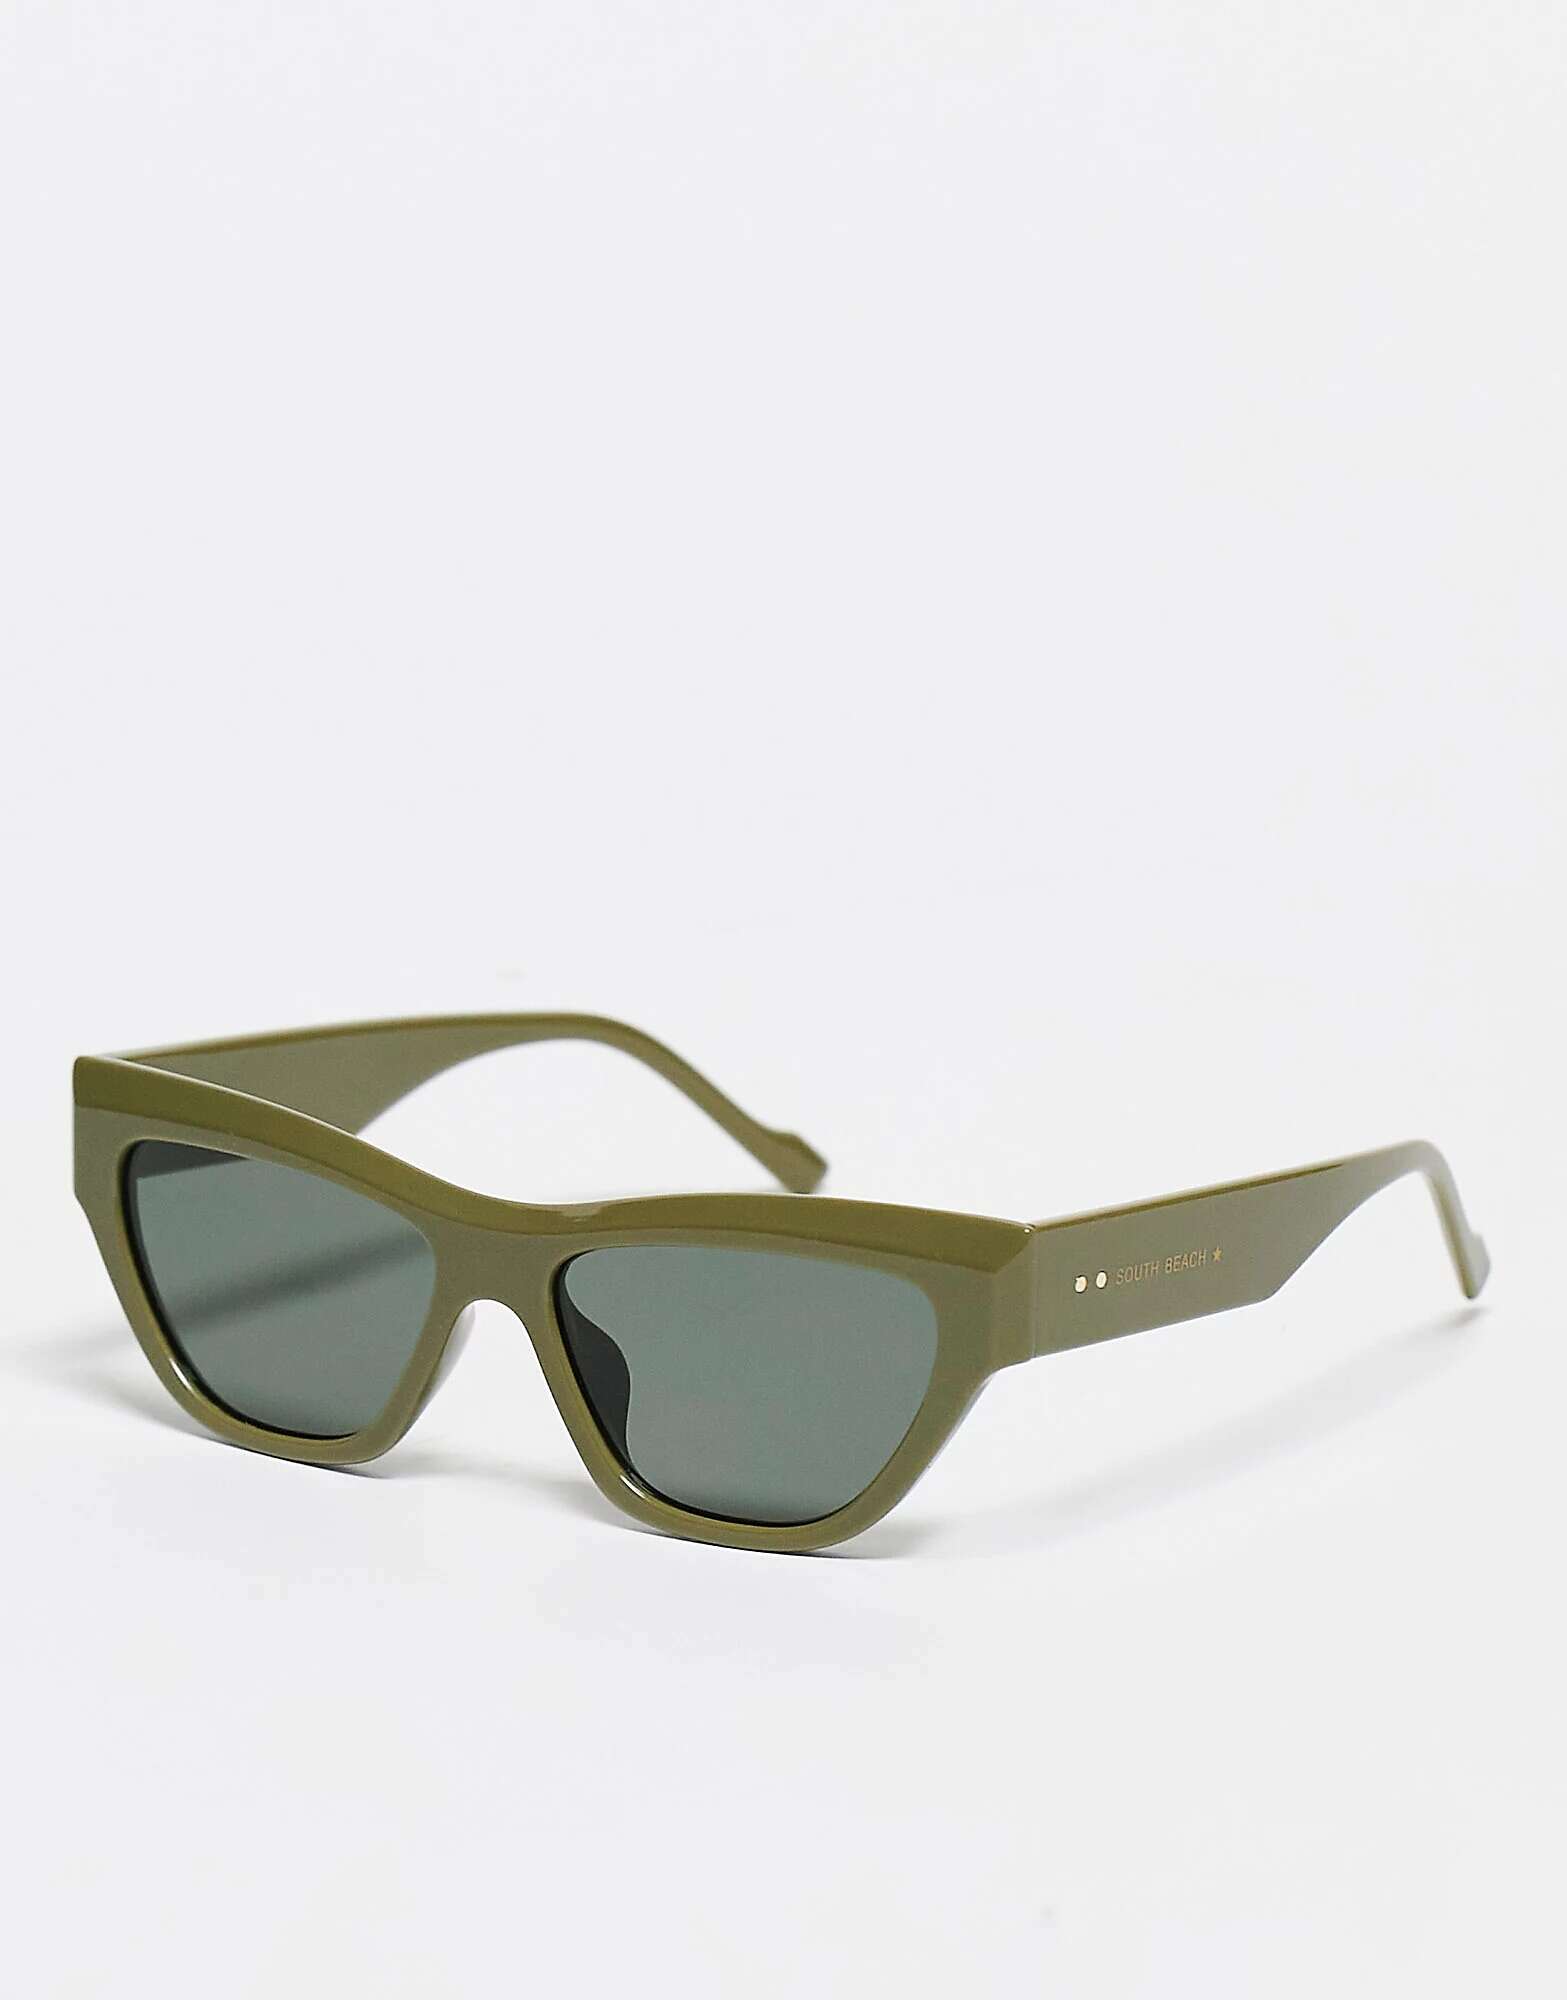 цена Солнцезащитные очки «кошачий глаз» South Beach цвета хаки